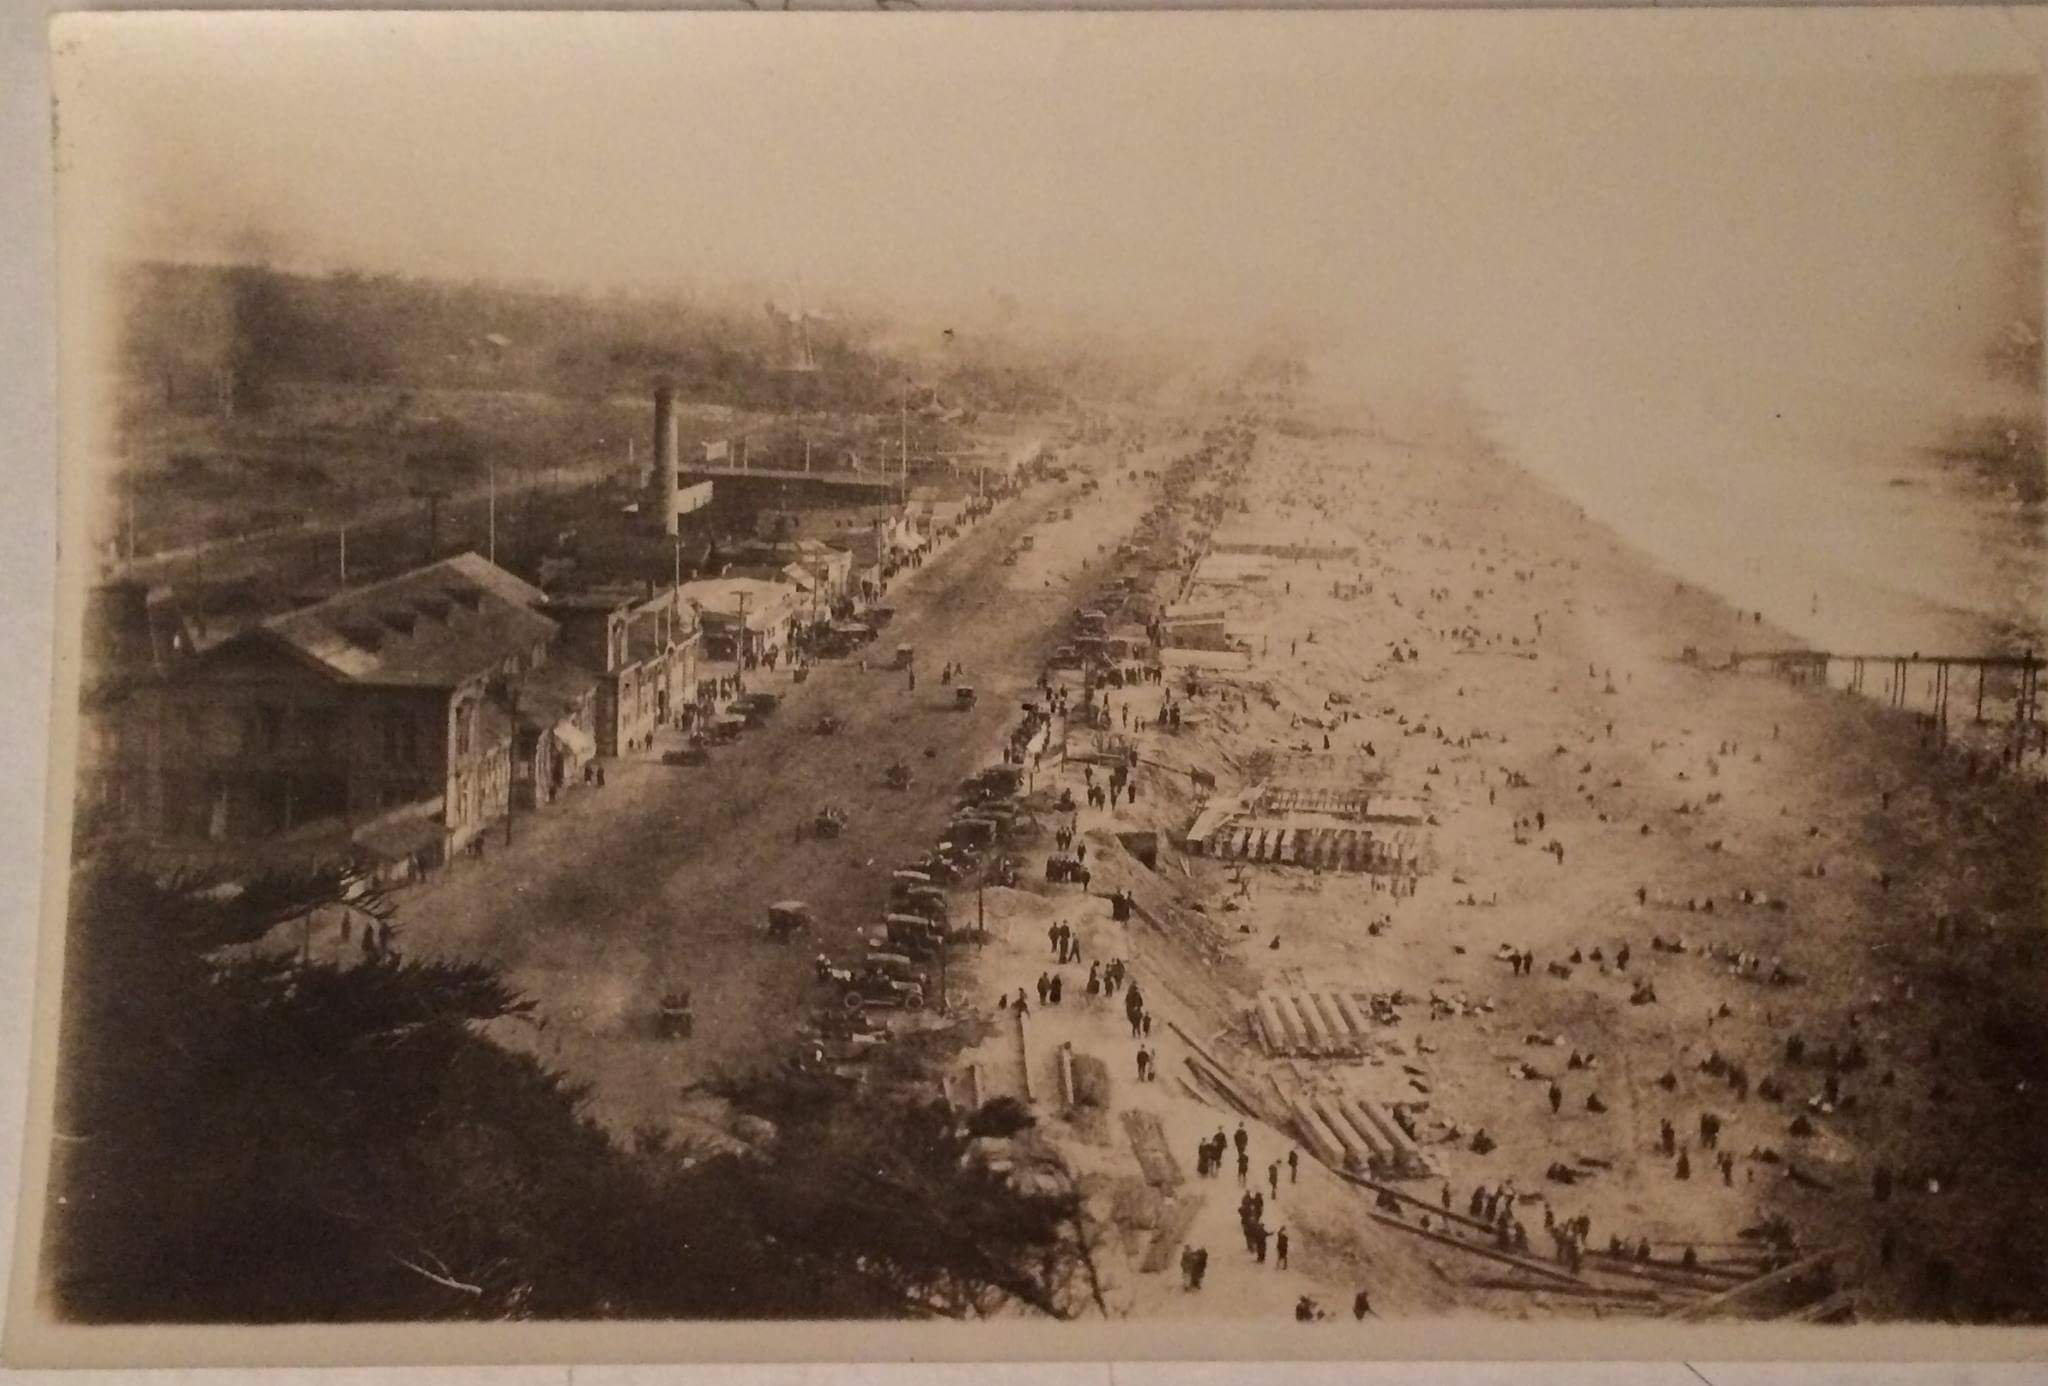 Ocean Beach 1916 w/ Lurline Pier at right